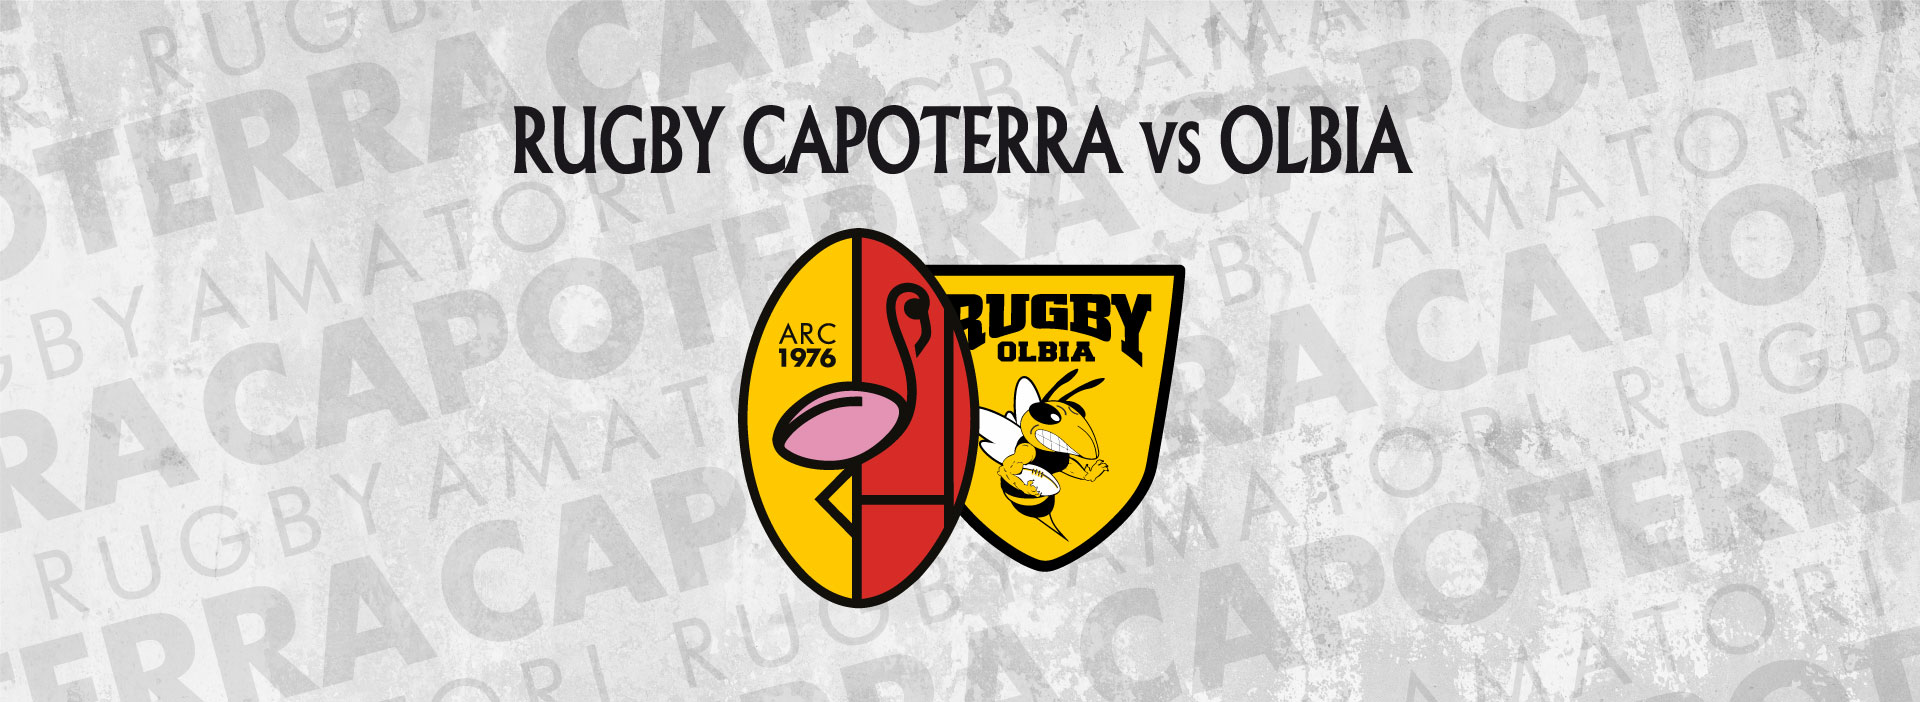 Rugby Capoterra vs Olbia